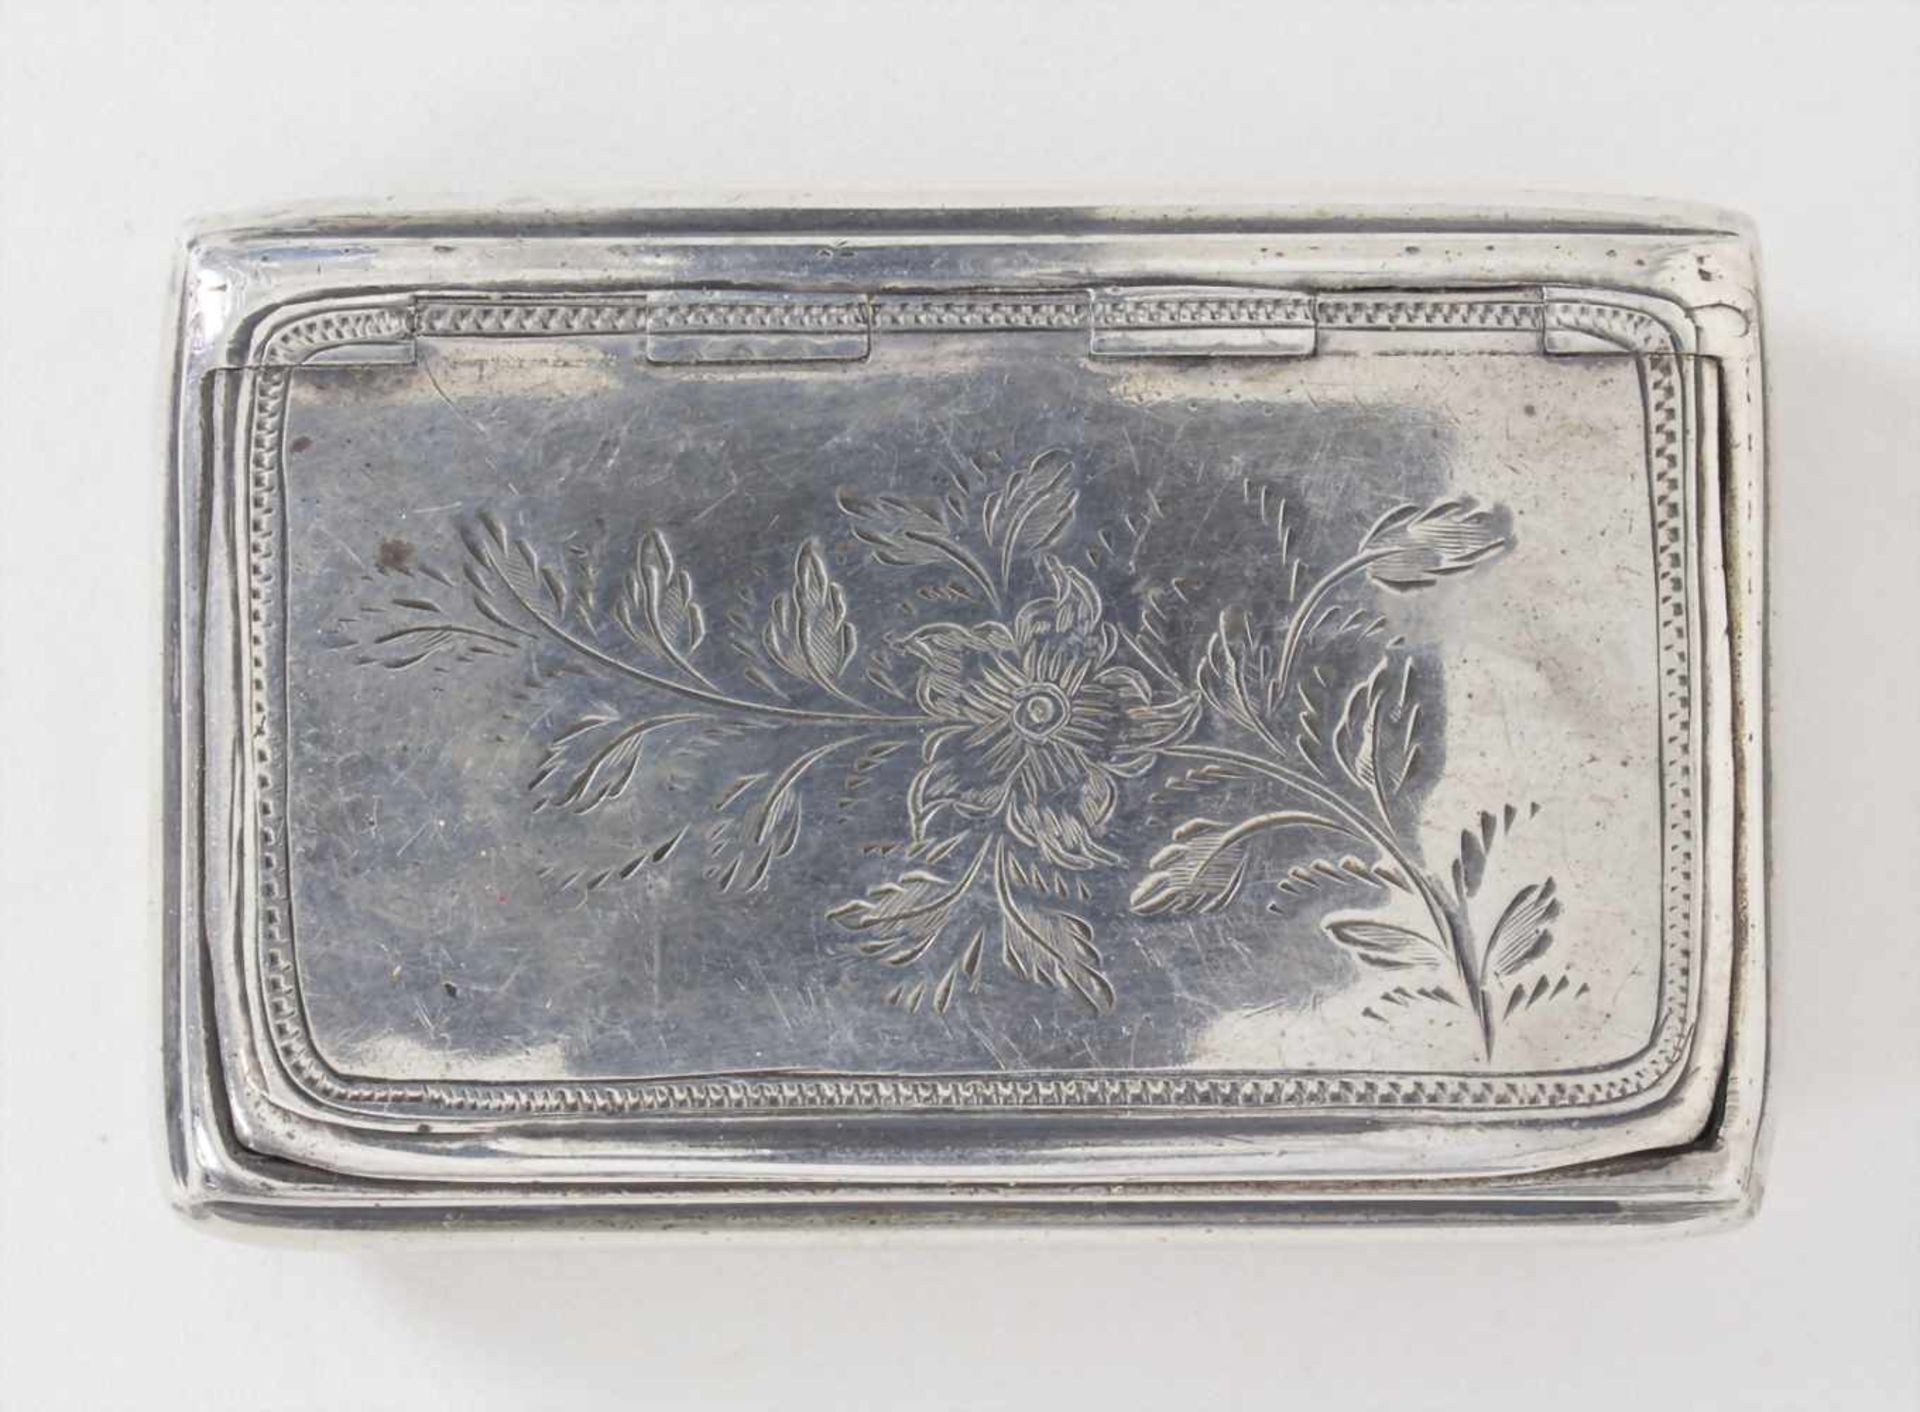 Tabatiere / Schnupftabakdose / A silver snuffbox, Thomas Shaw, Birmingham, 1835Material: Sterling